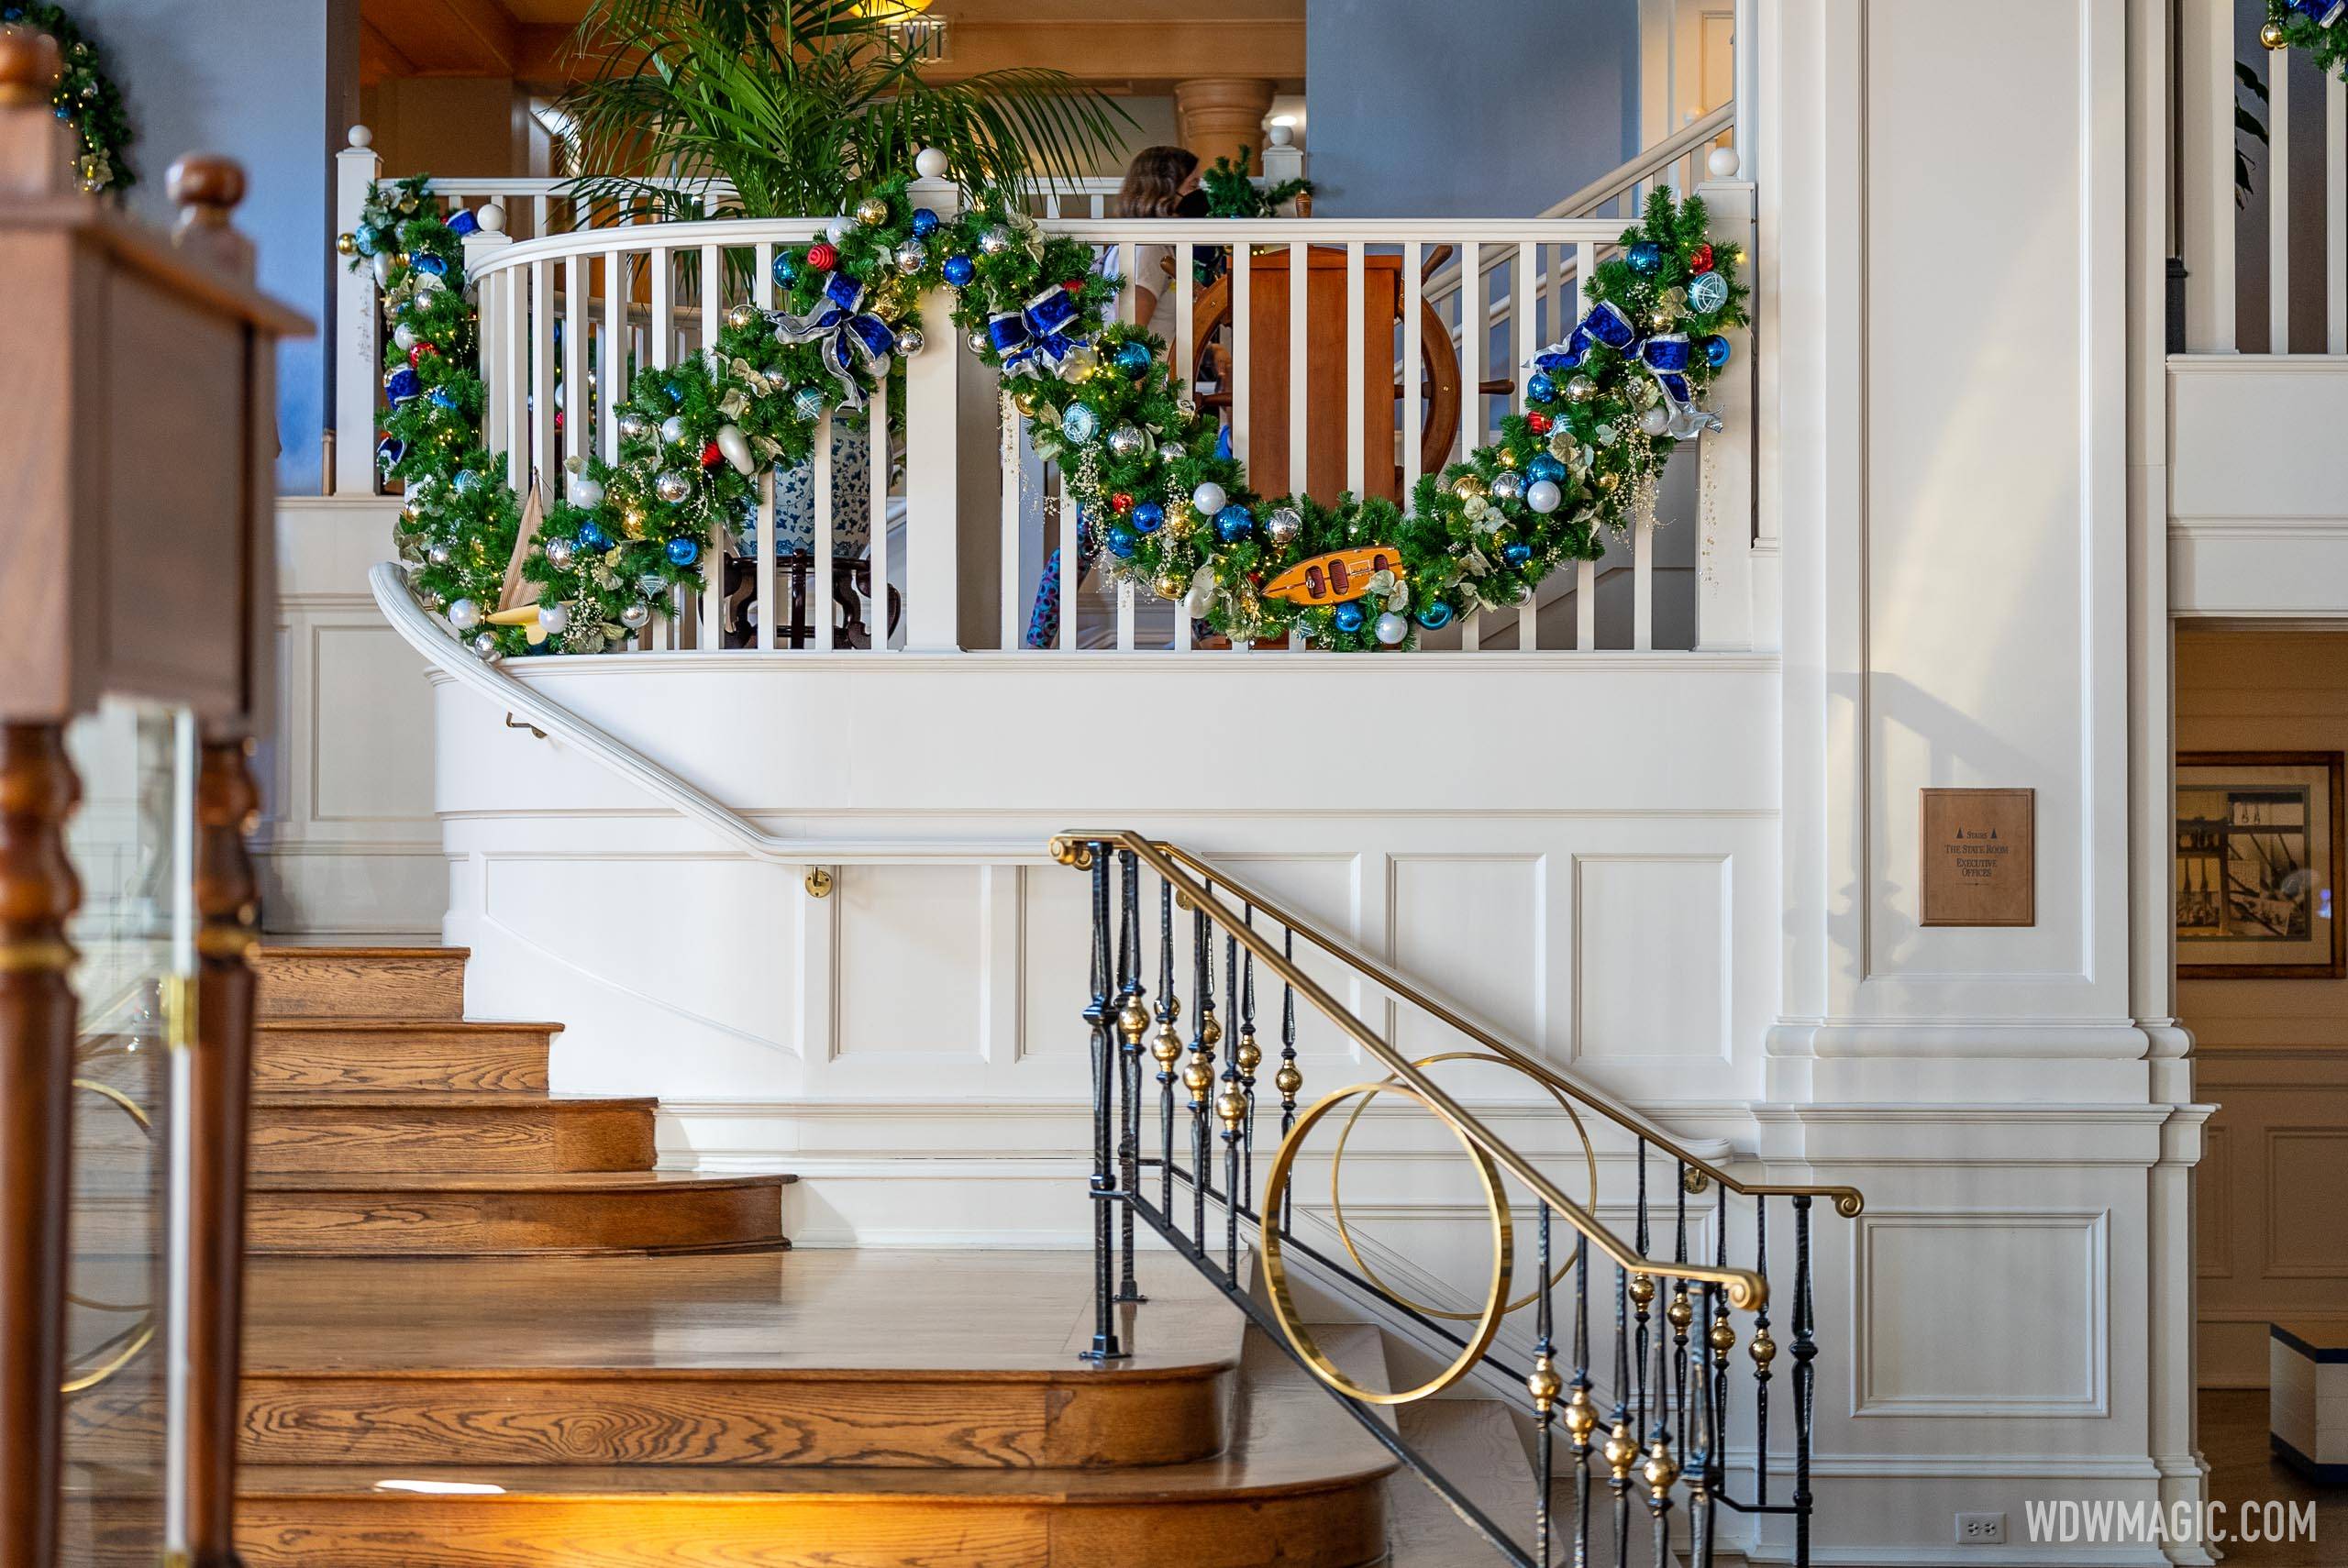 Yacht Club Resort Christmas Holiday decor 2021